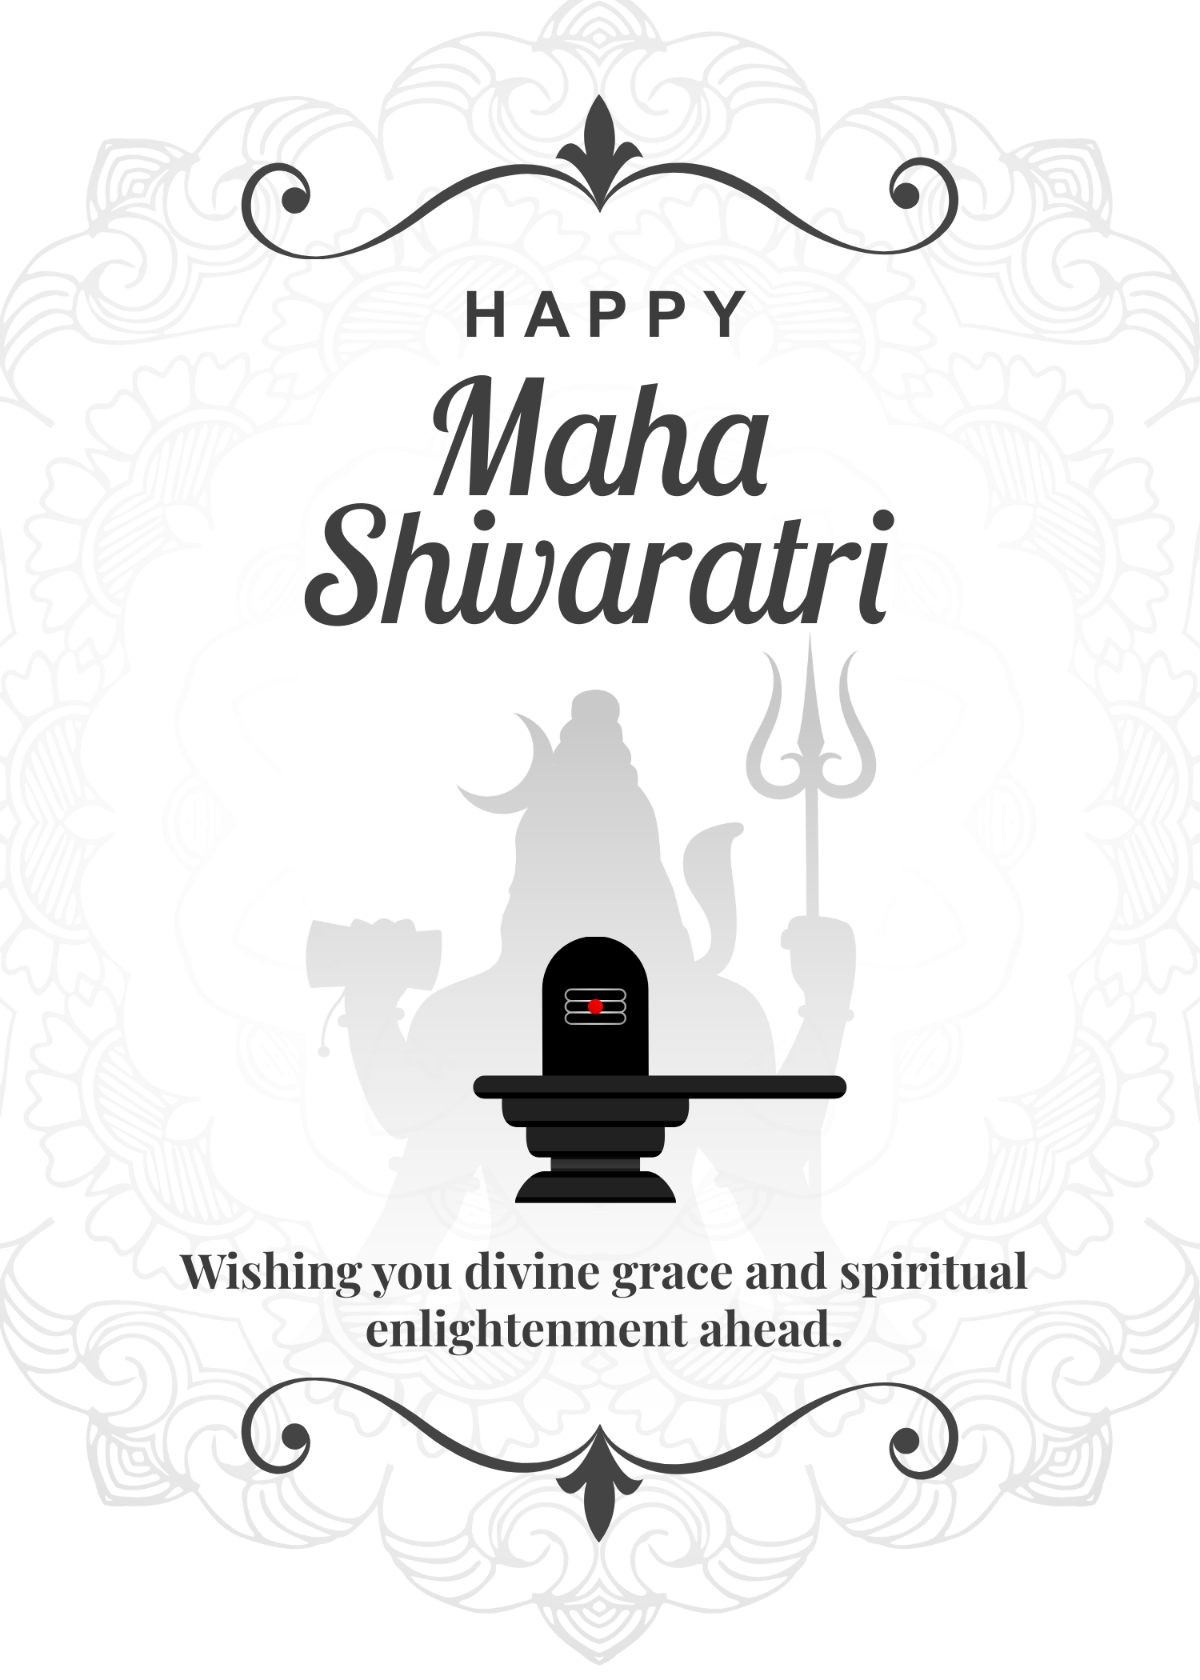  Maha Shivaratri Greeting Card Template